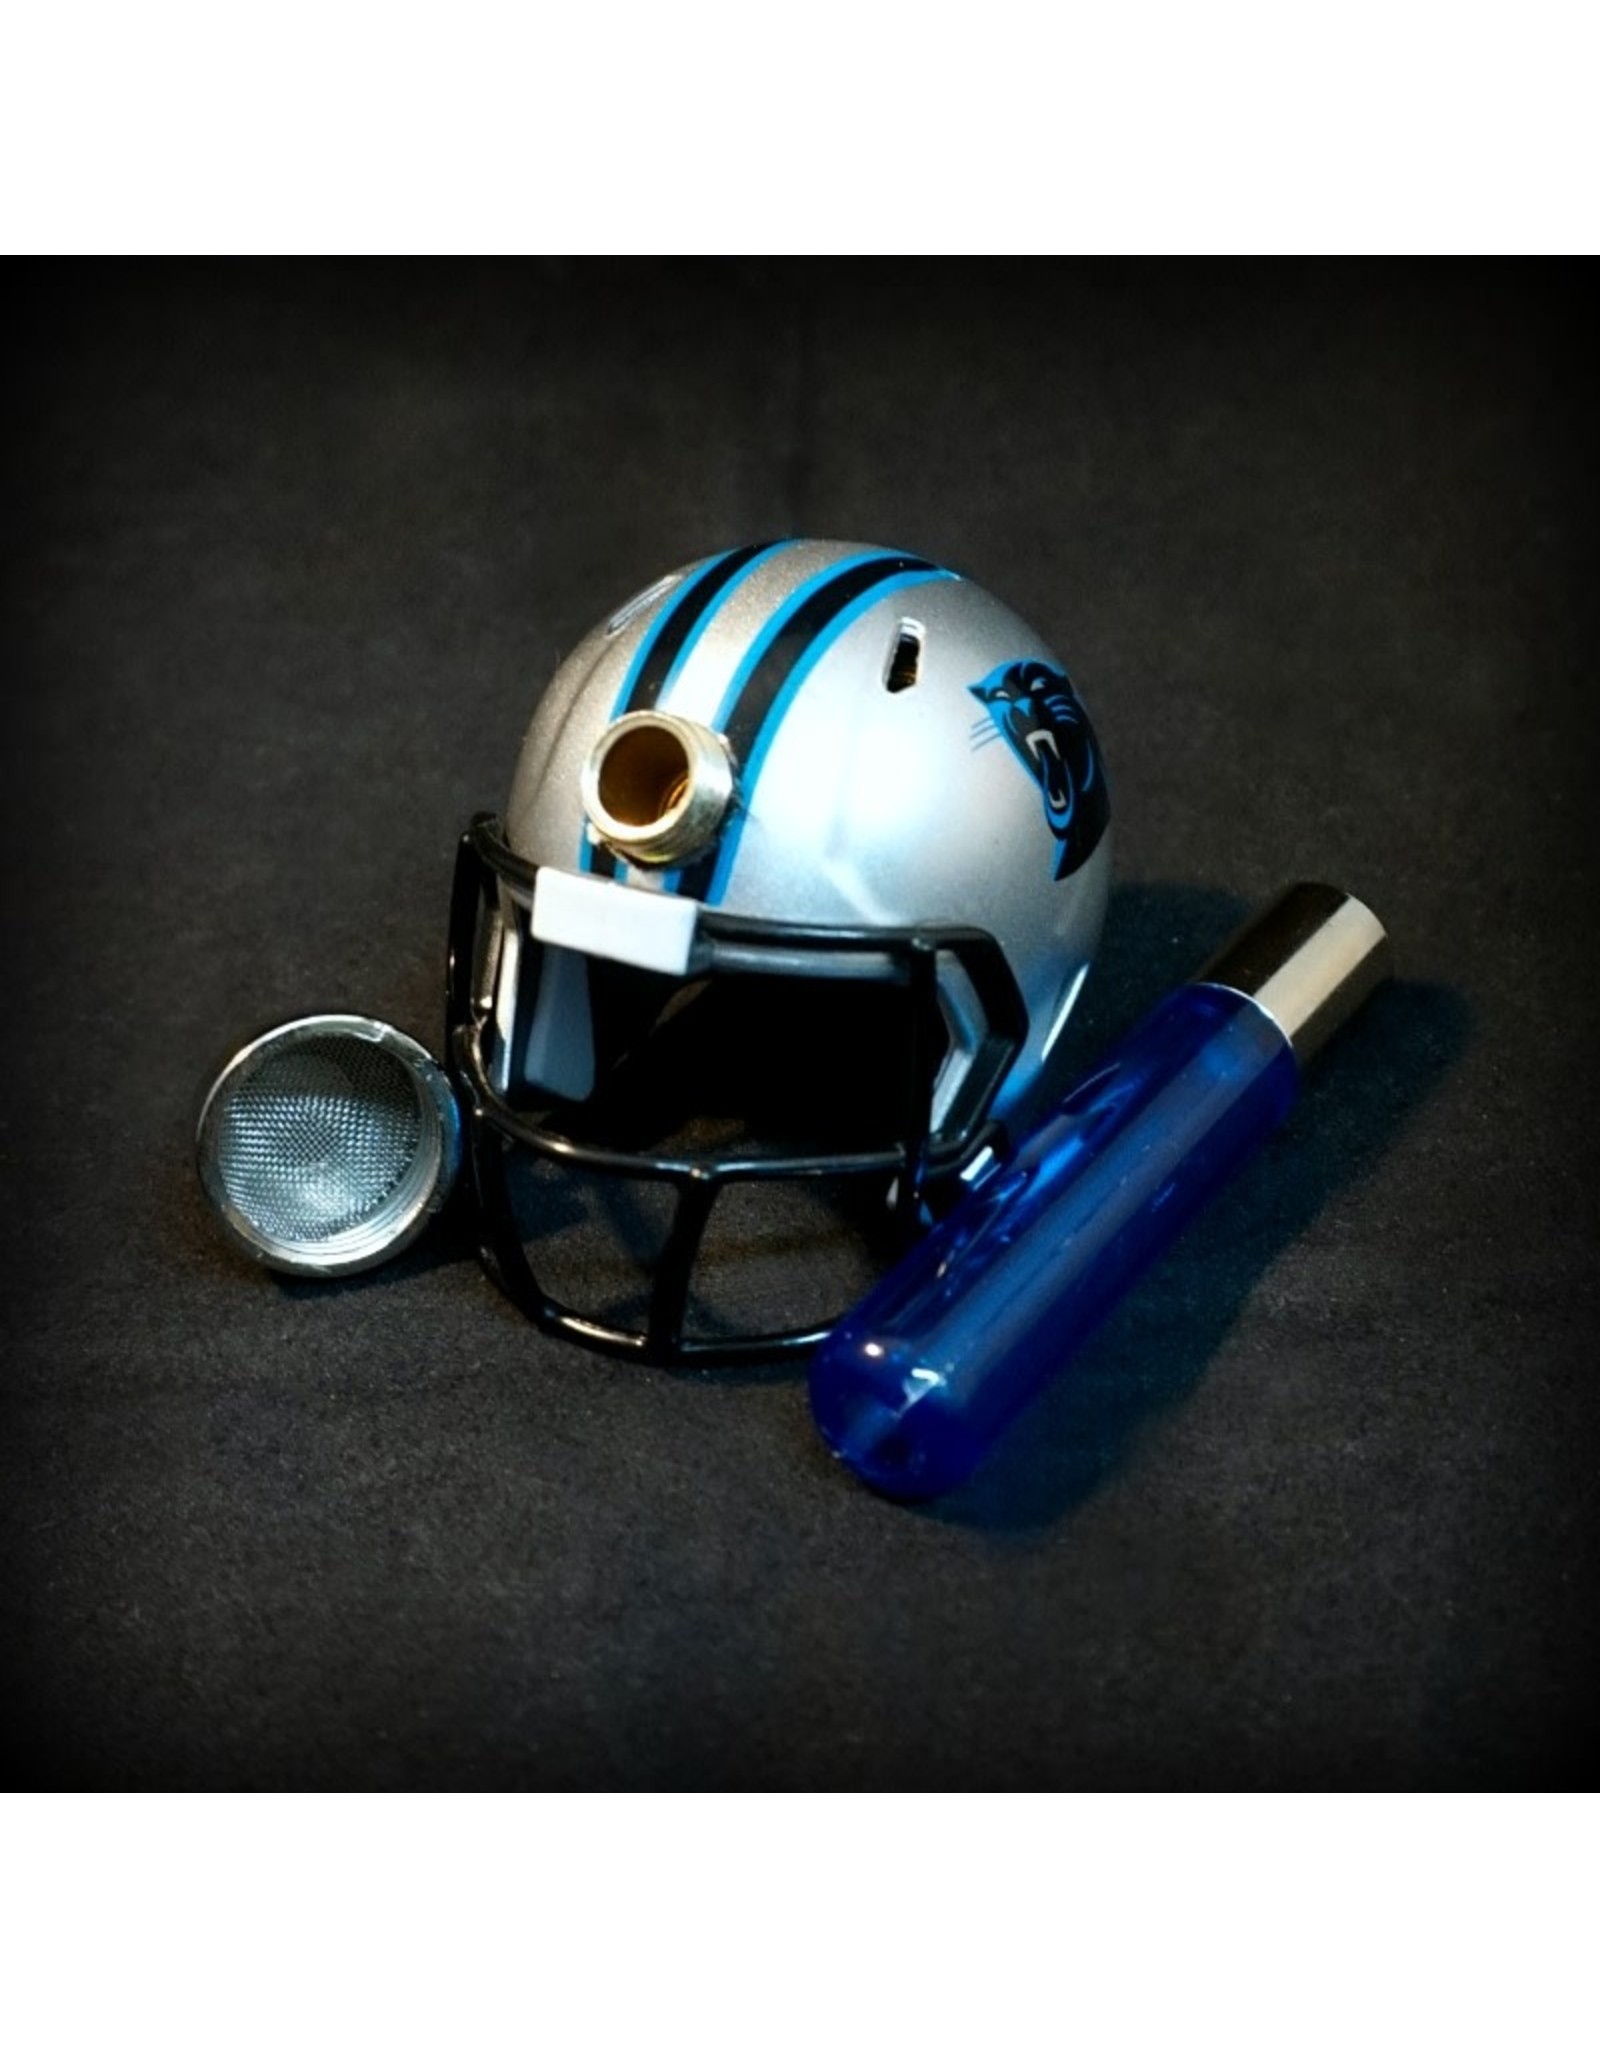 NFL Metal Handpipe - Carolina Panthers